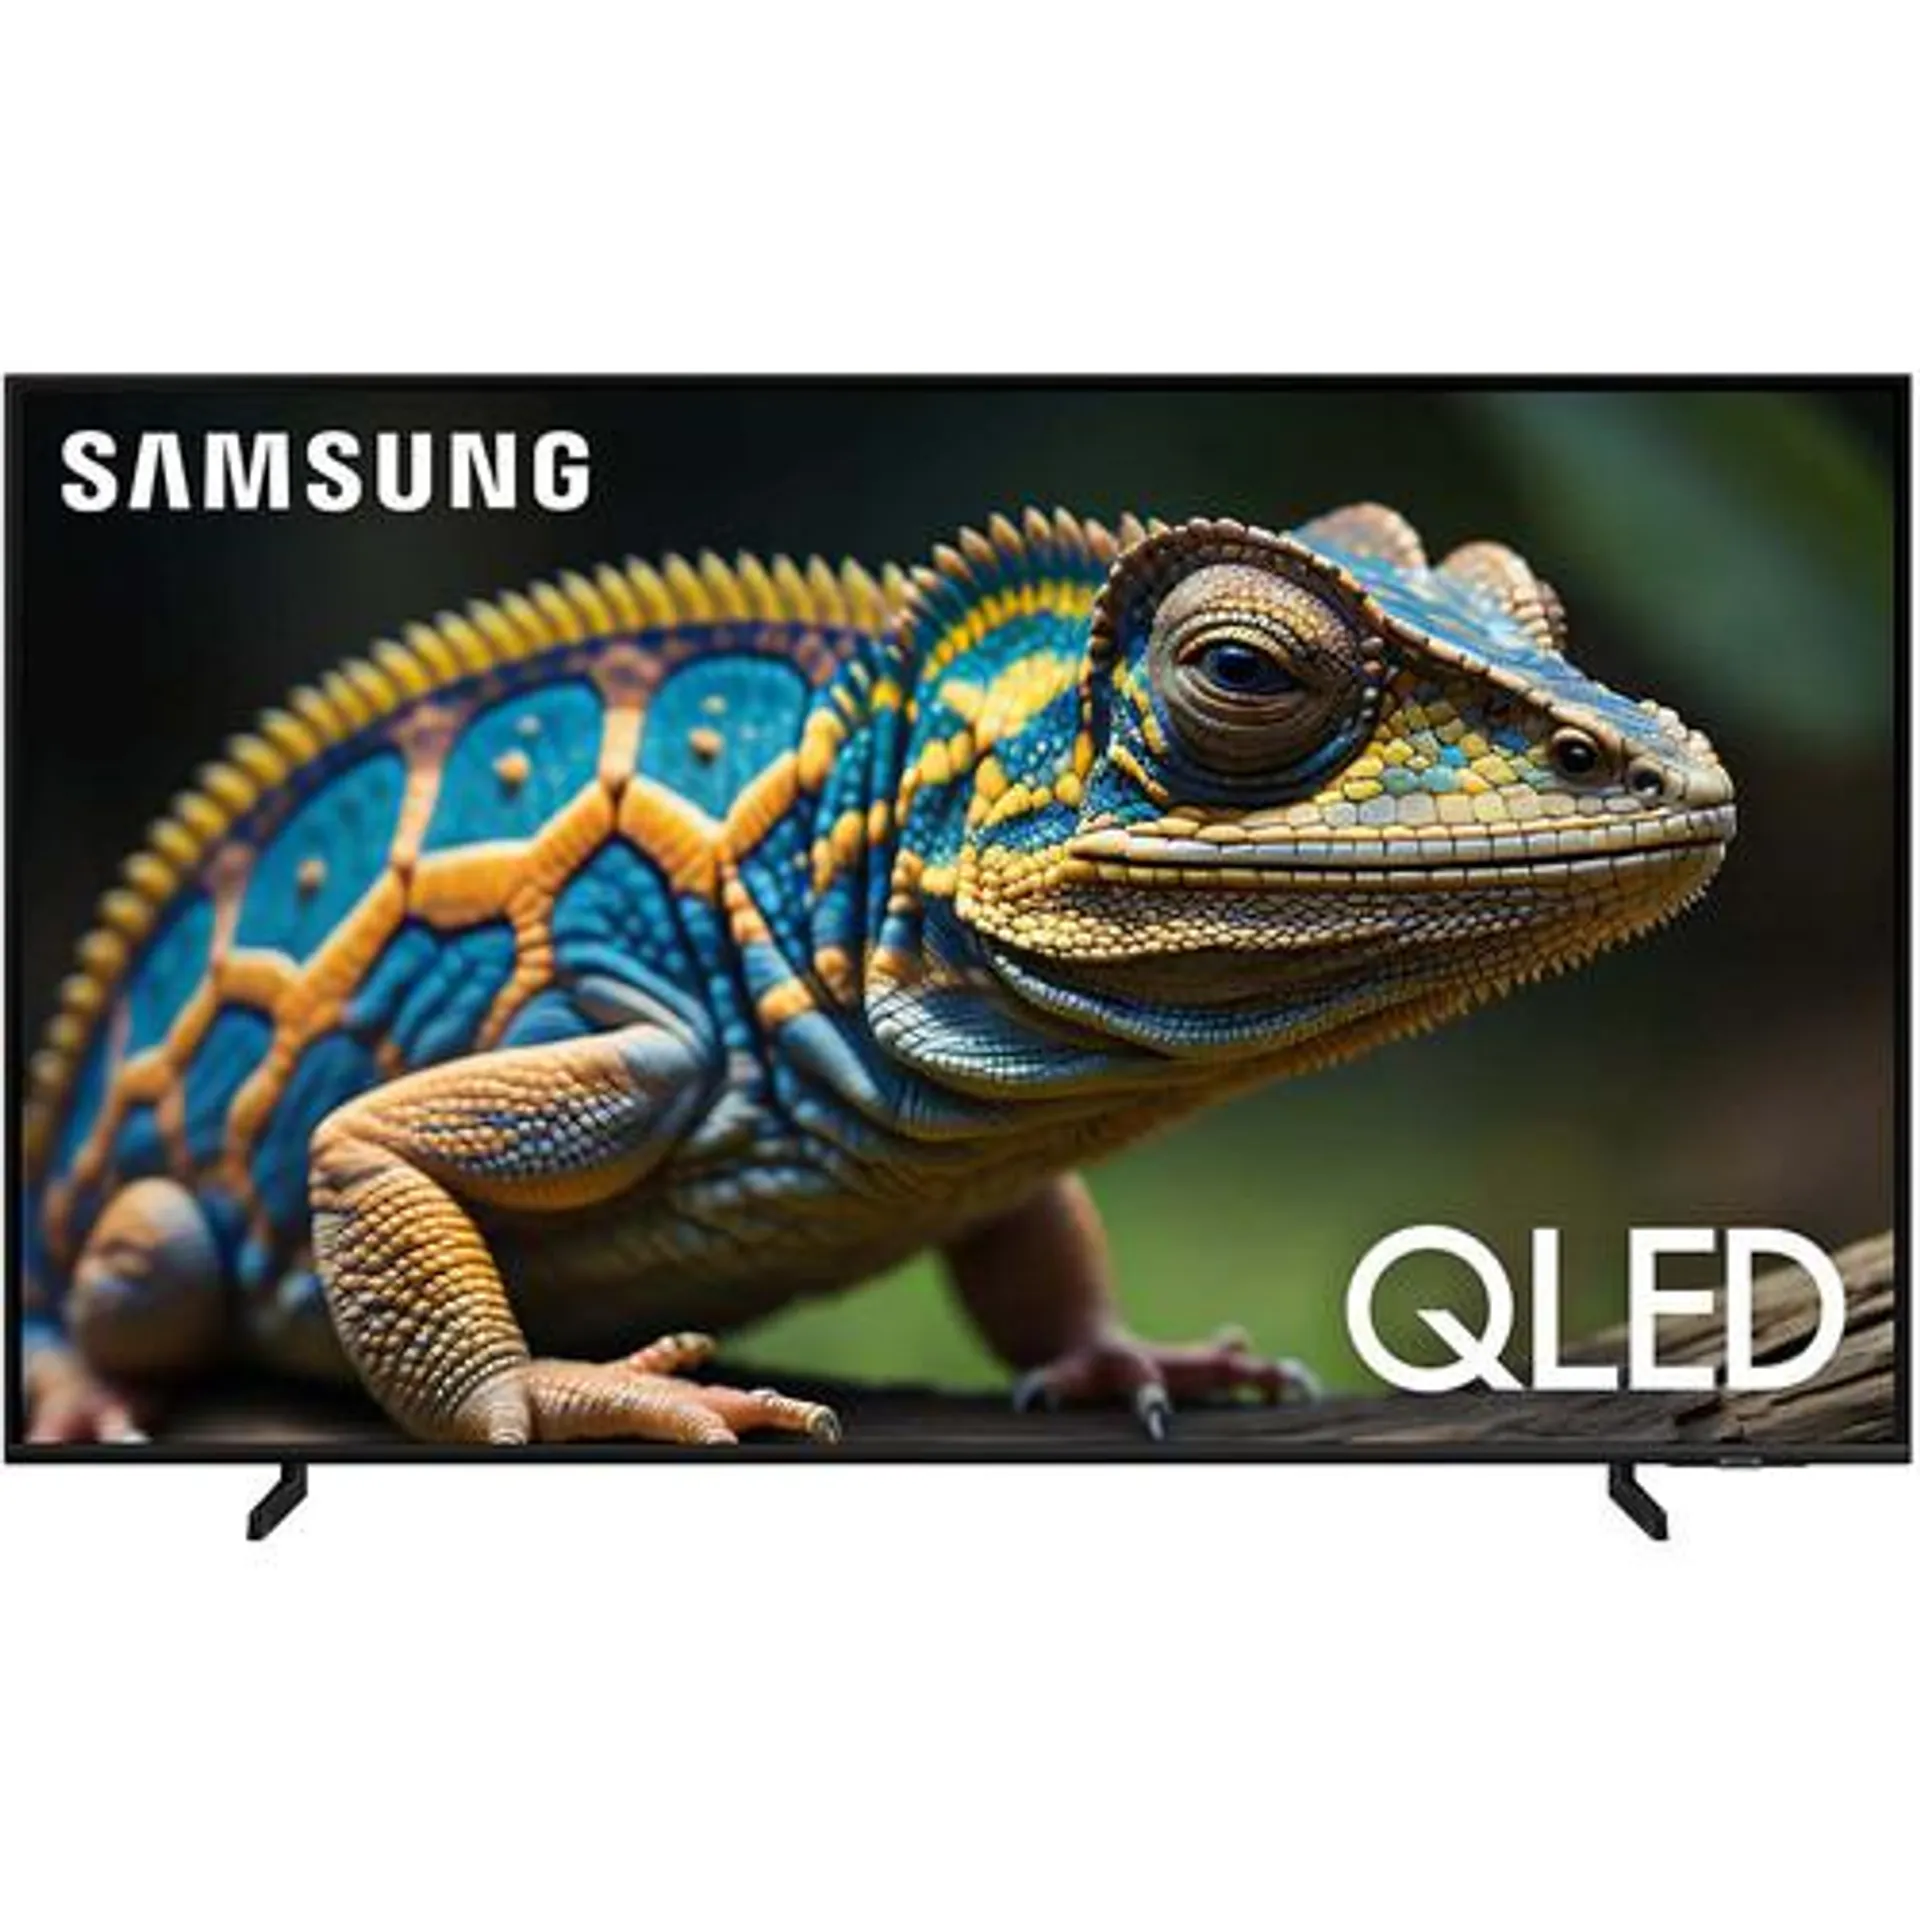 Samsung Q60D Series 32" 4K HDR Smart QLED TV